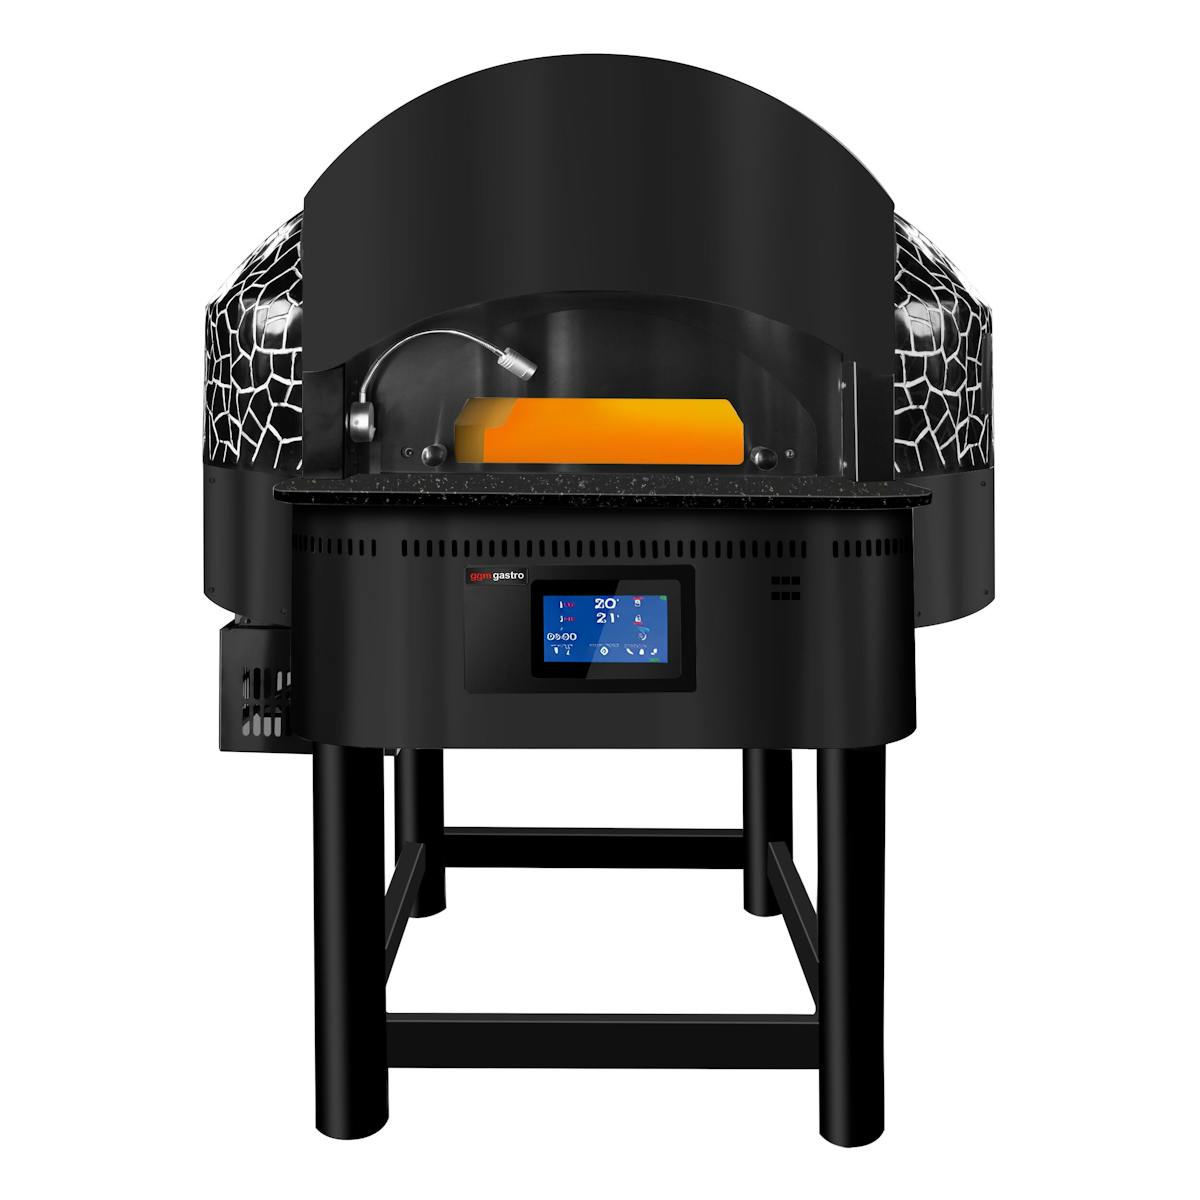 Gas stone pizza oven - 9x 30 cm Digital